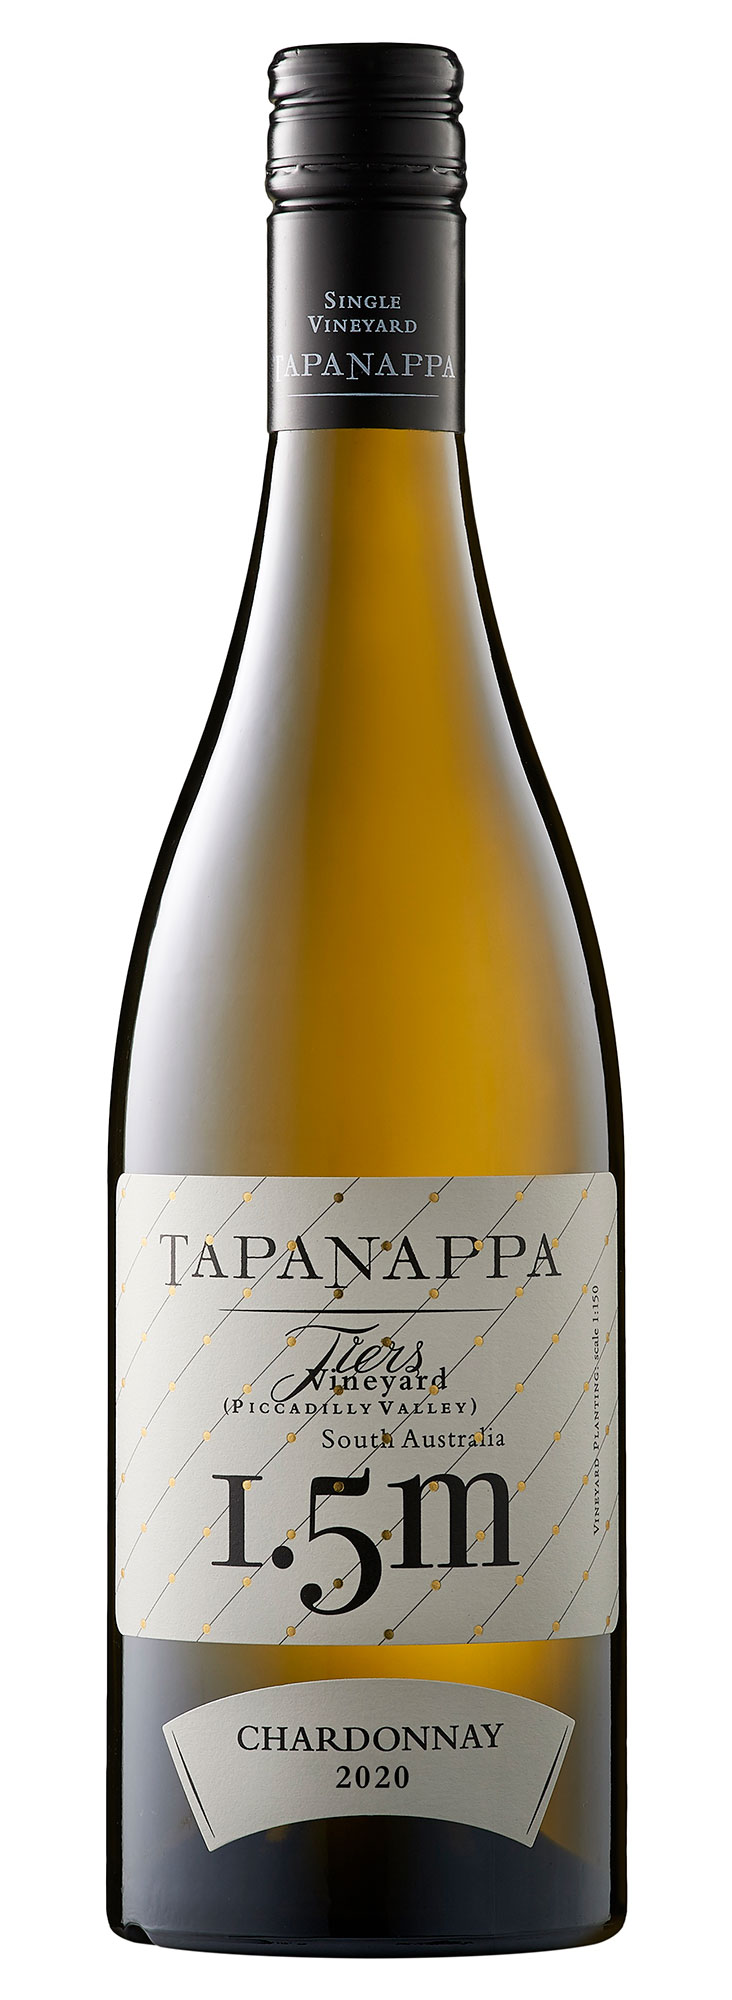 Tapanappa Tiers Vineyard 1.5m 2020 Chardonnay